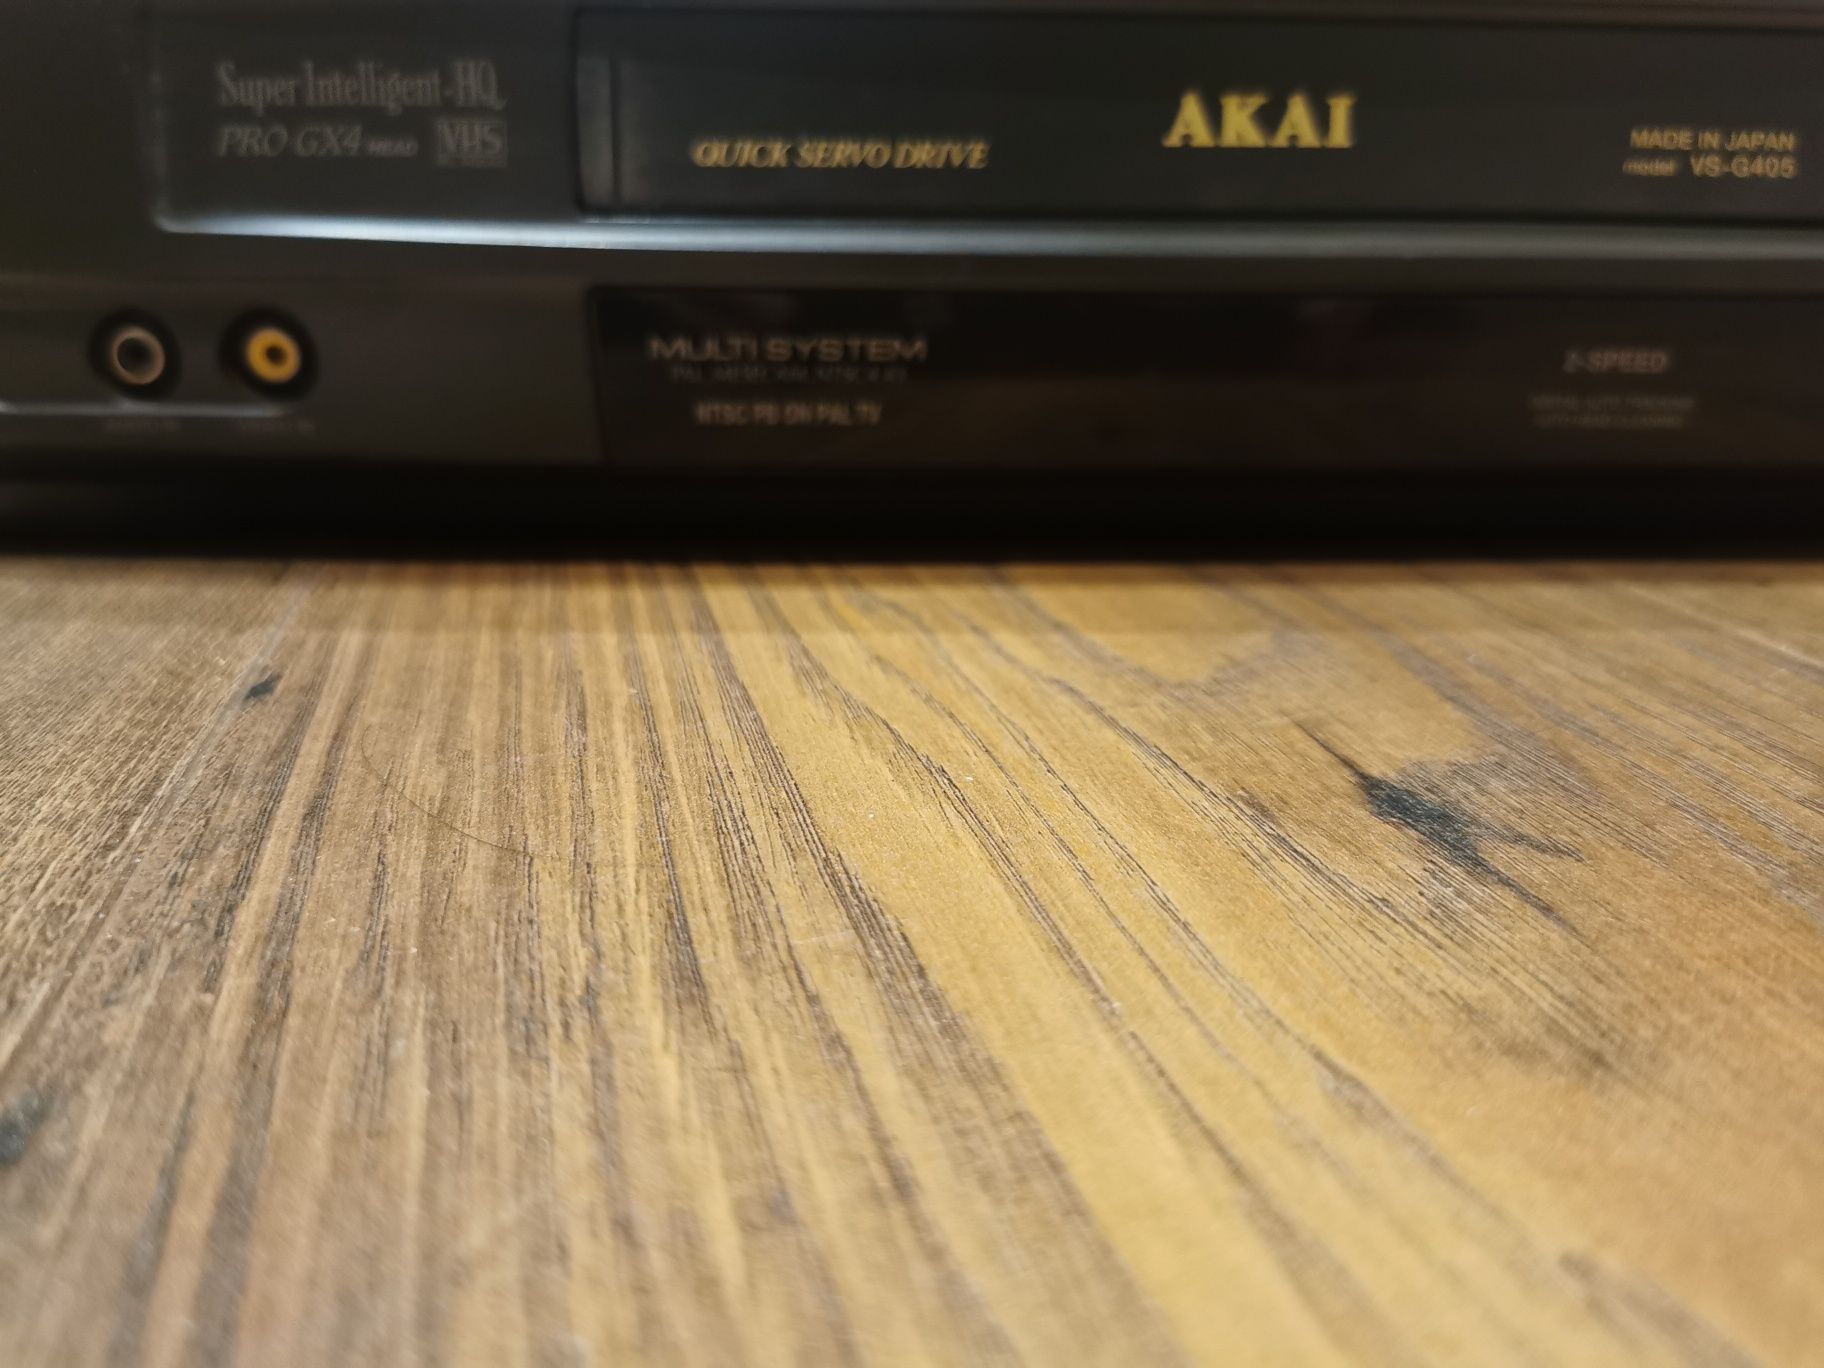 Magnetowid Akai VS-G405